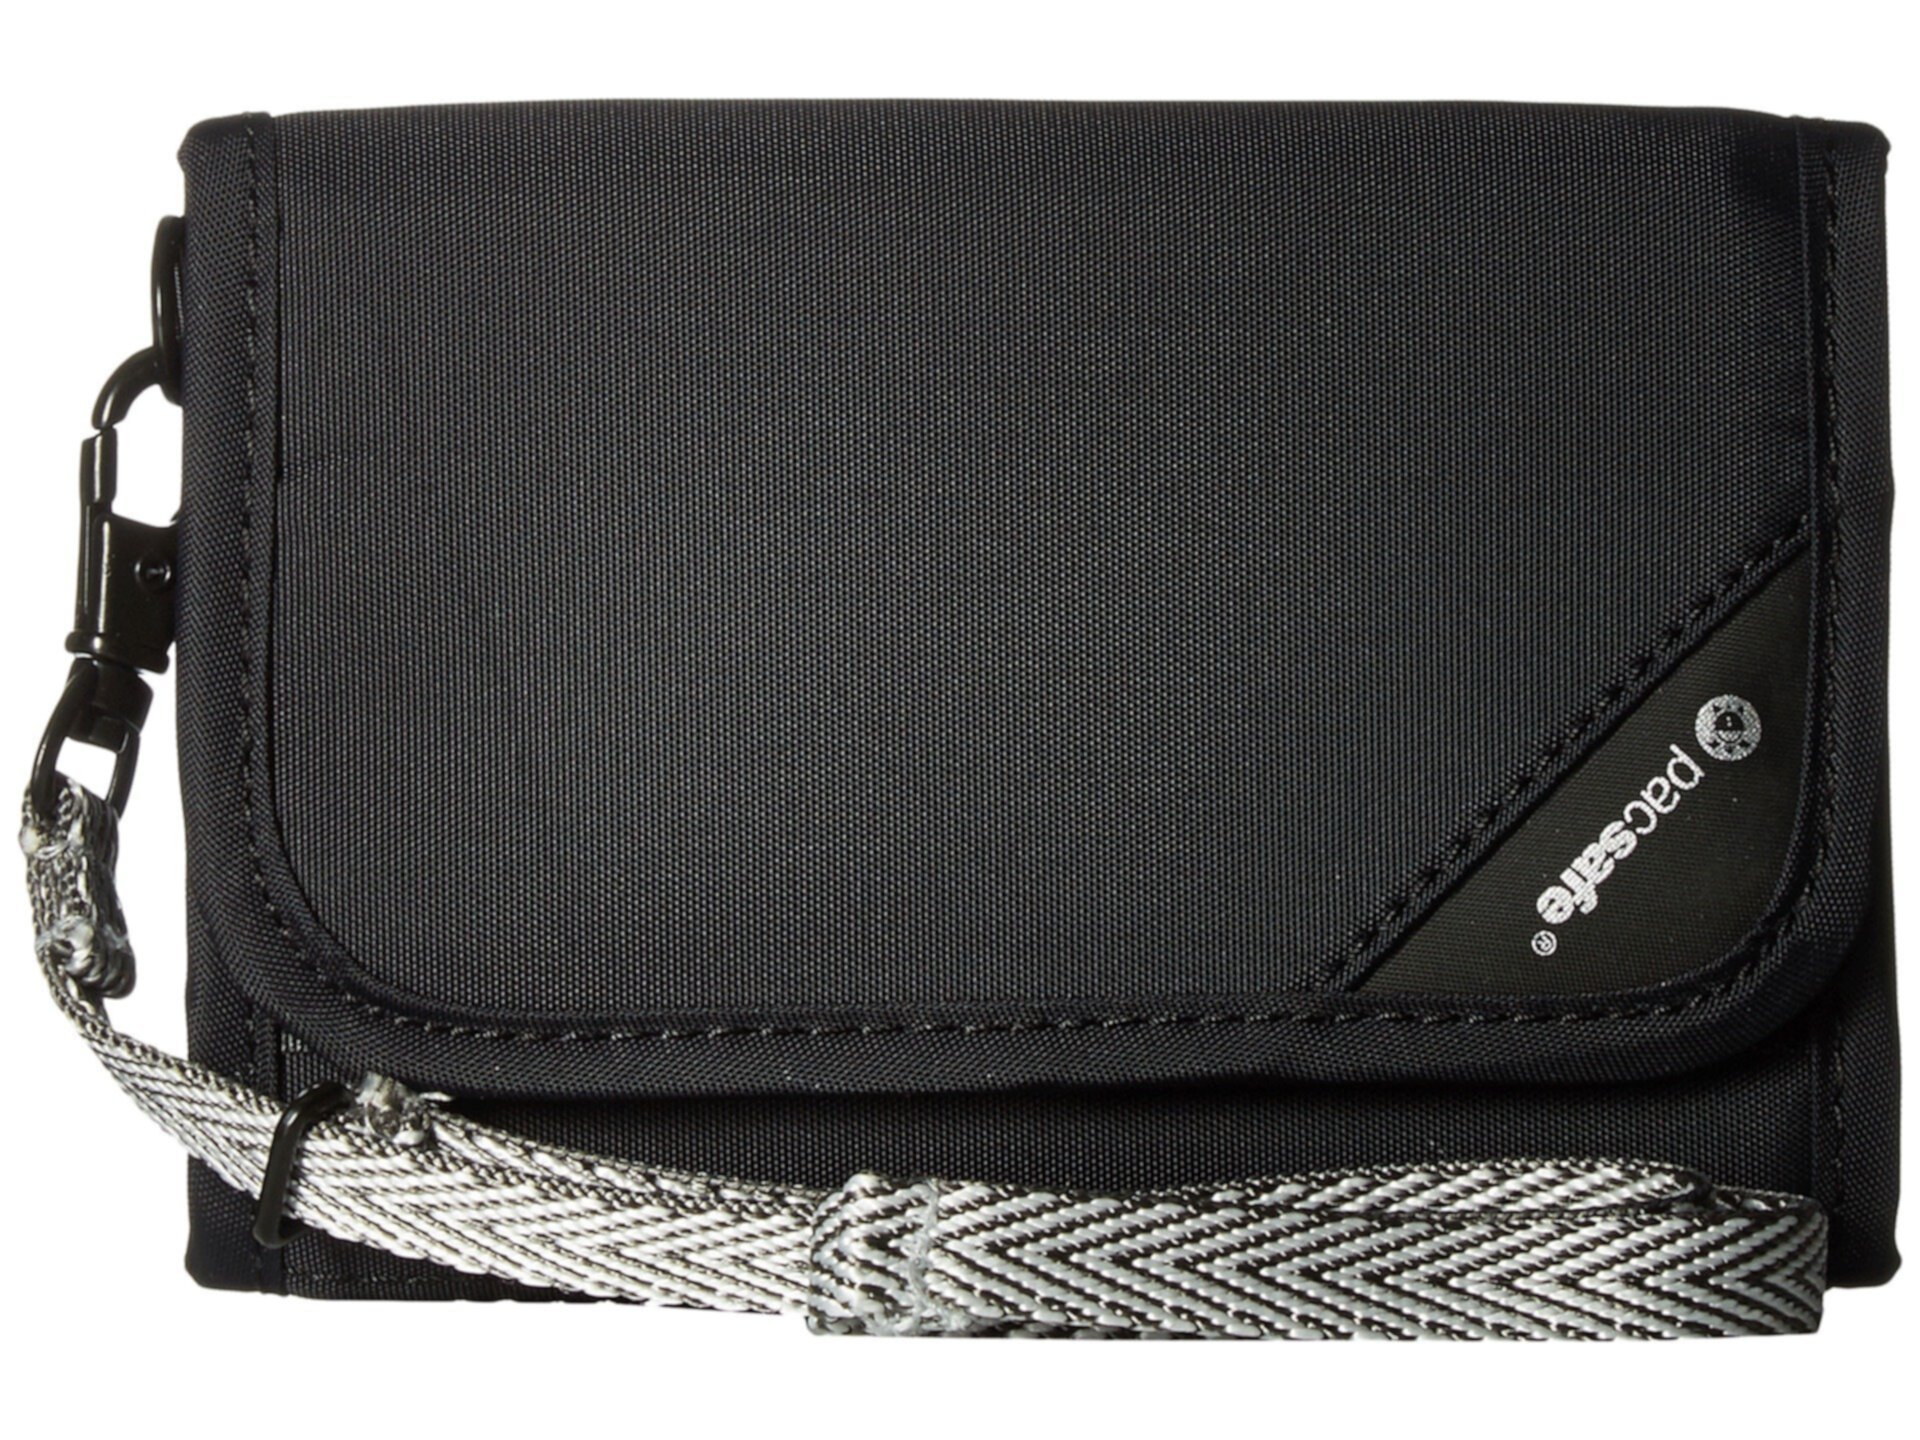 RFIDsafe V125 противоугонная блокирующая сумка RFID Pacsafe